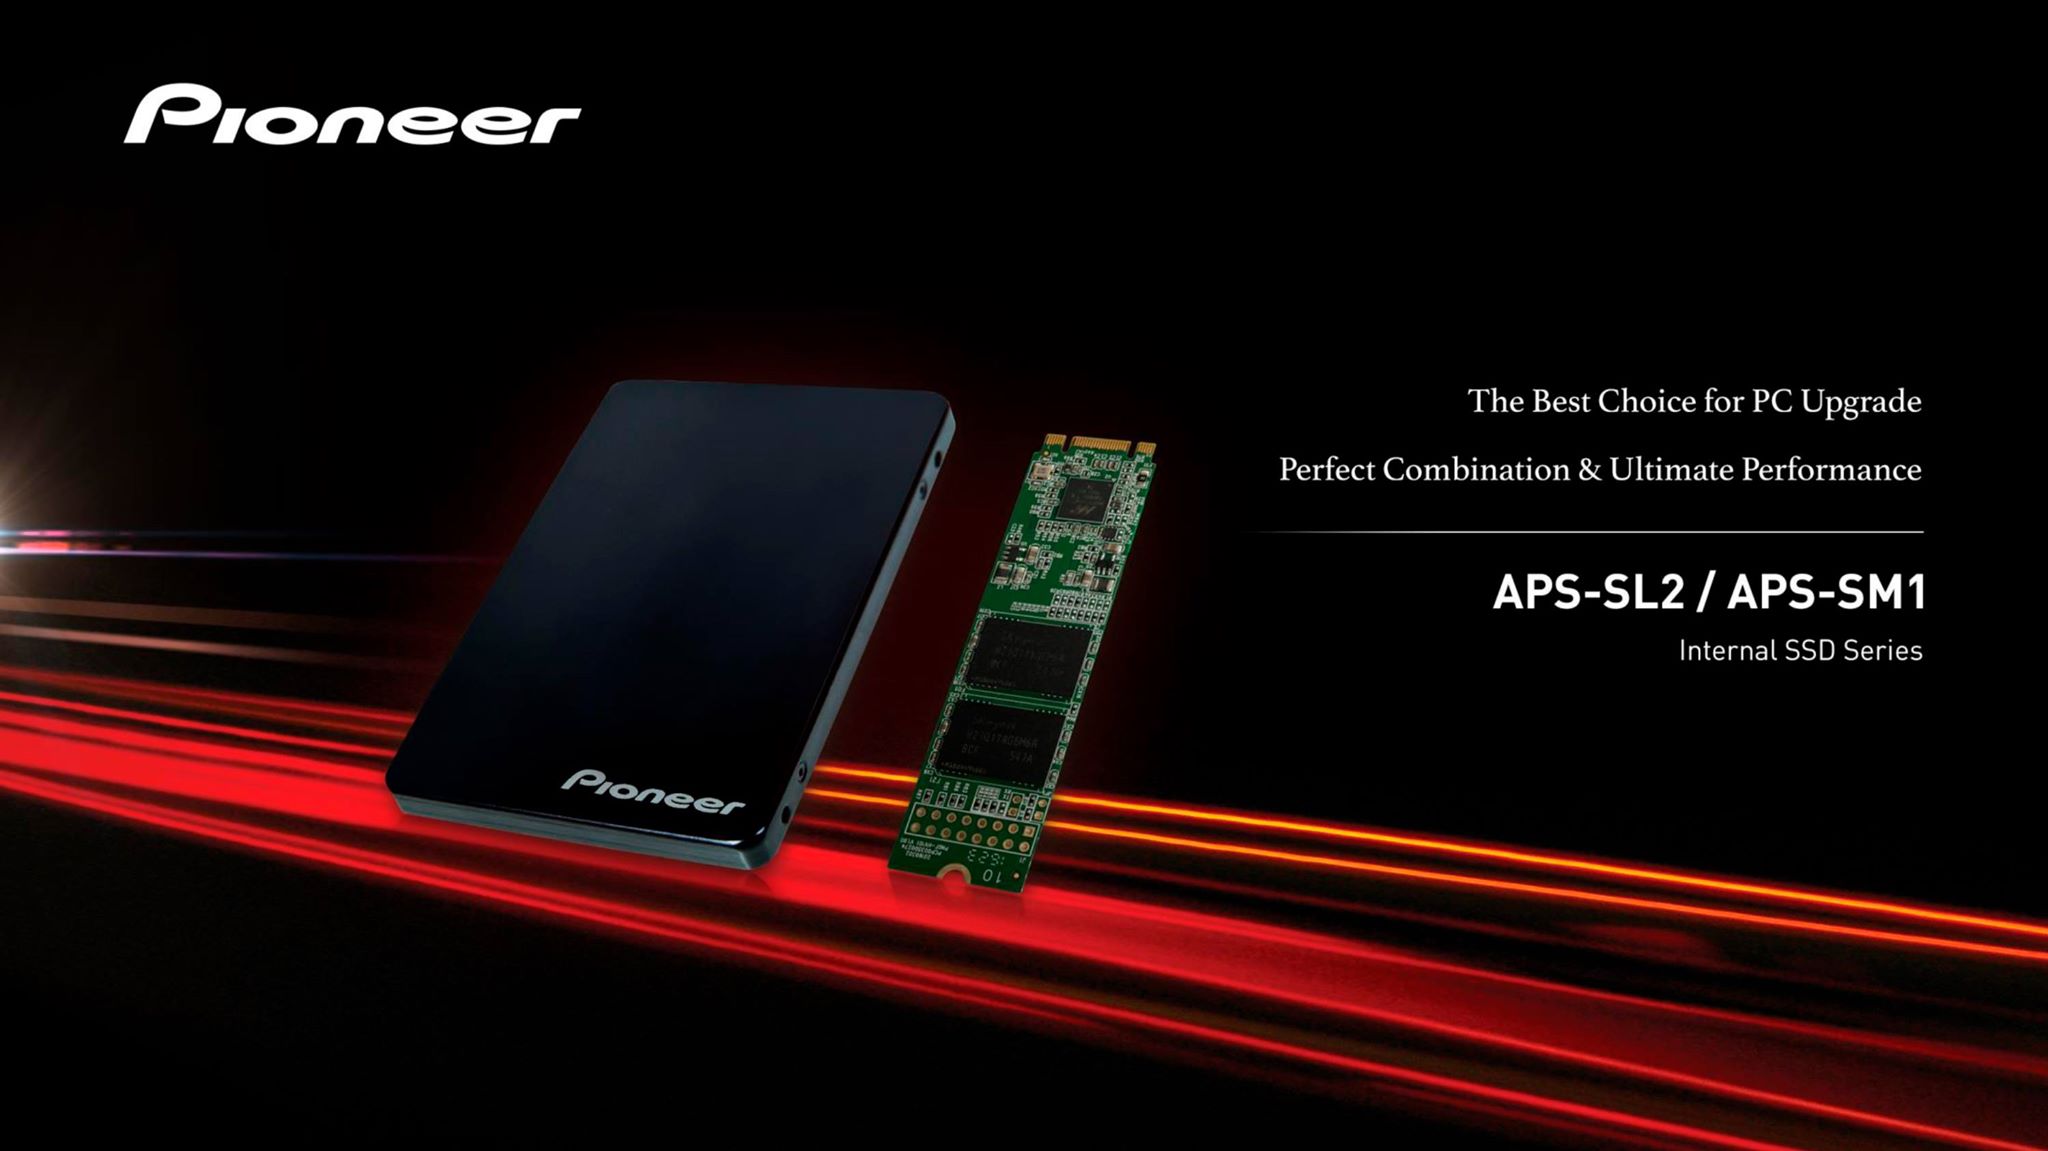 27946593 1572267372851208 588787426 o Pioneer เปิดตัว SSD และ M.2 ในรุ่น SSD APS SL2 และ APS SM1 ใหม่ล่าสุด